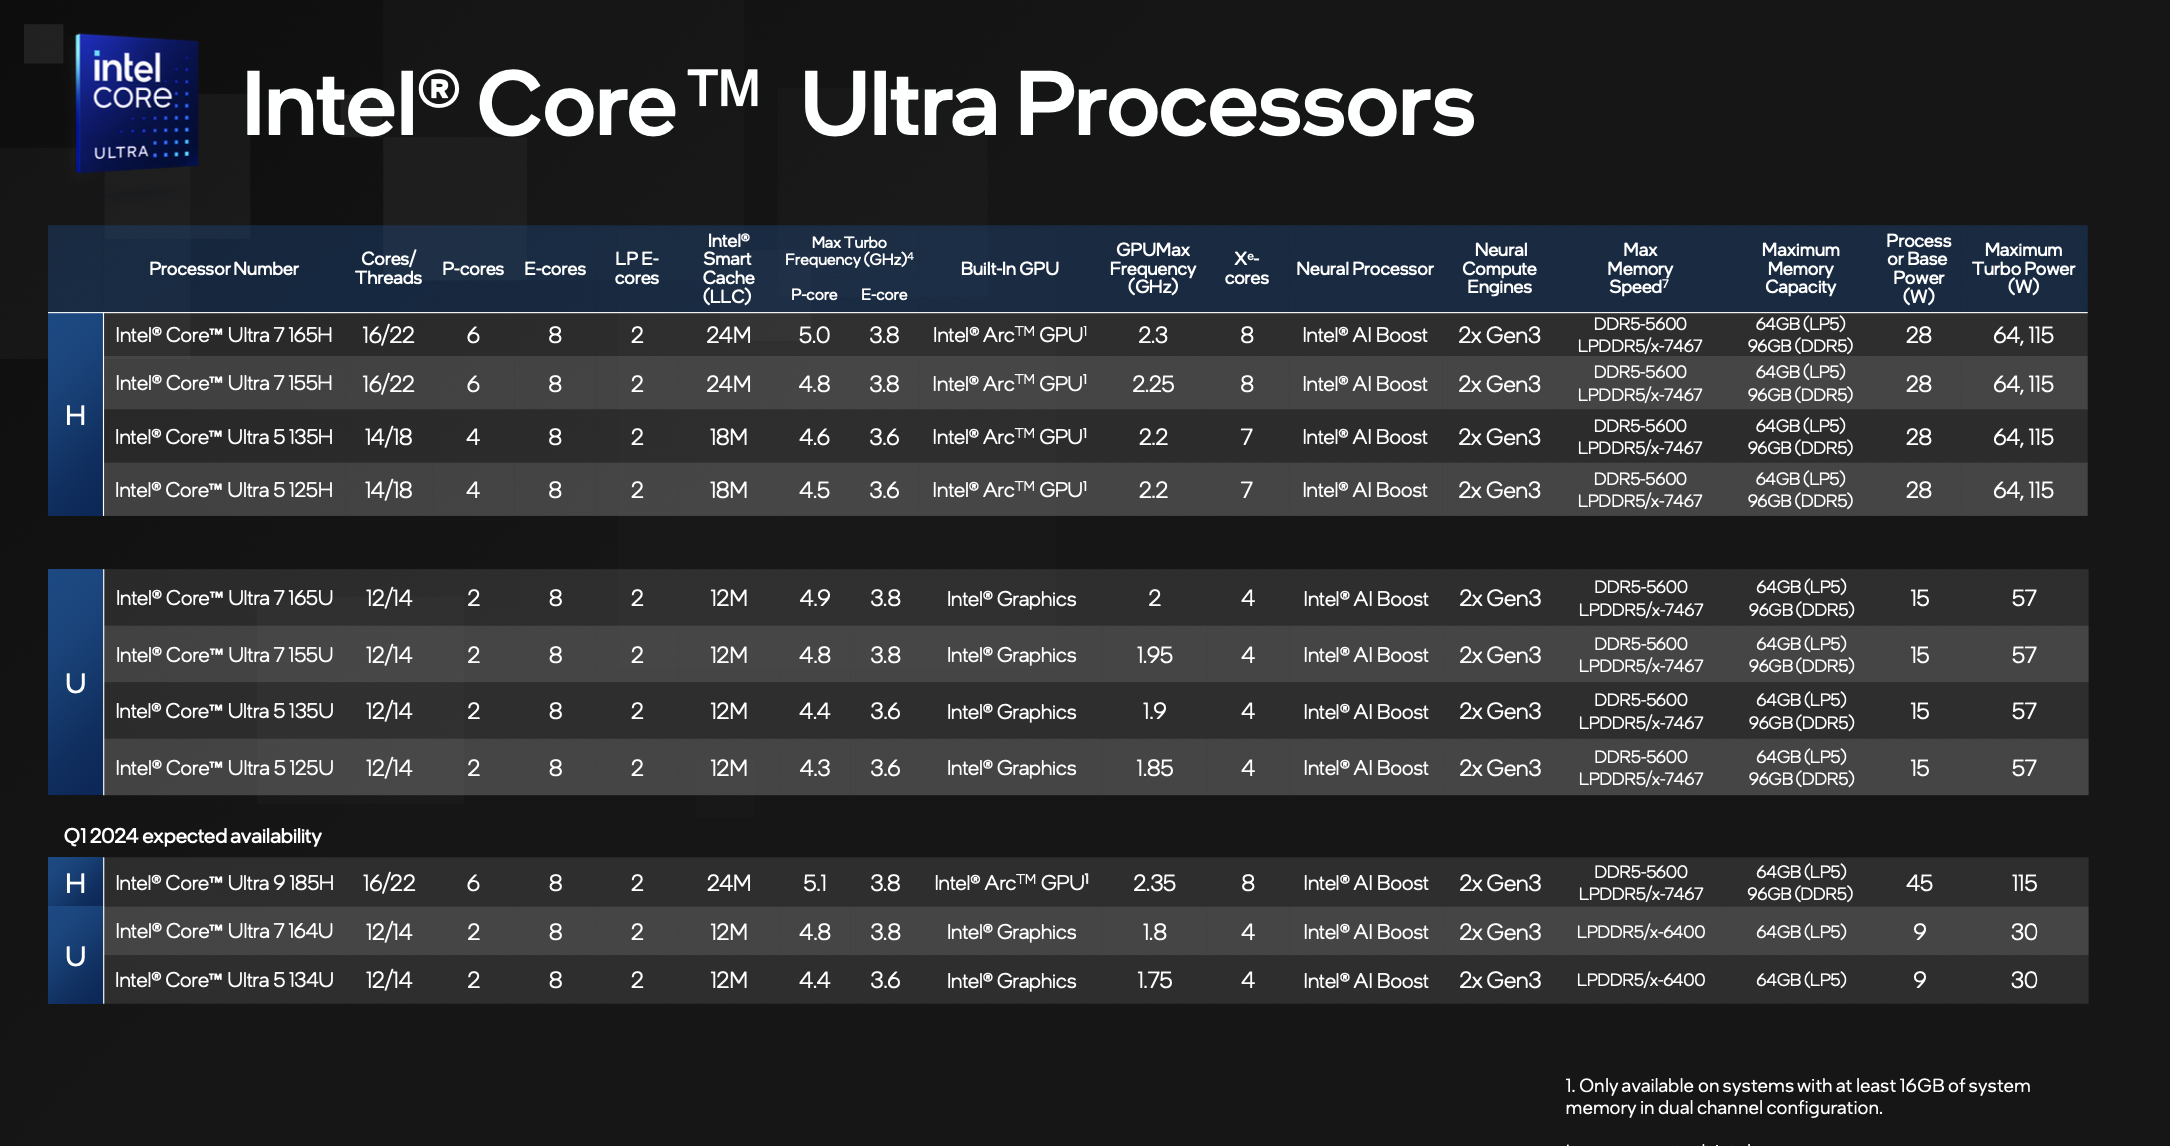 Intel Core Ultra family